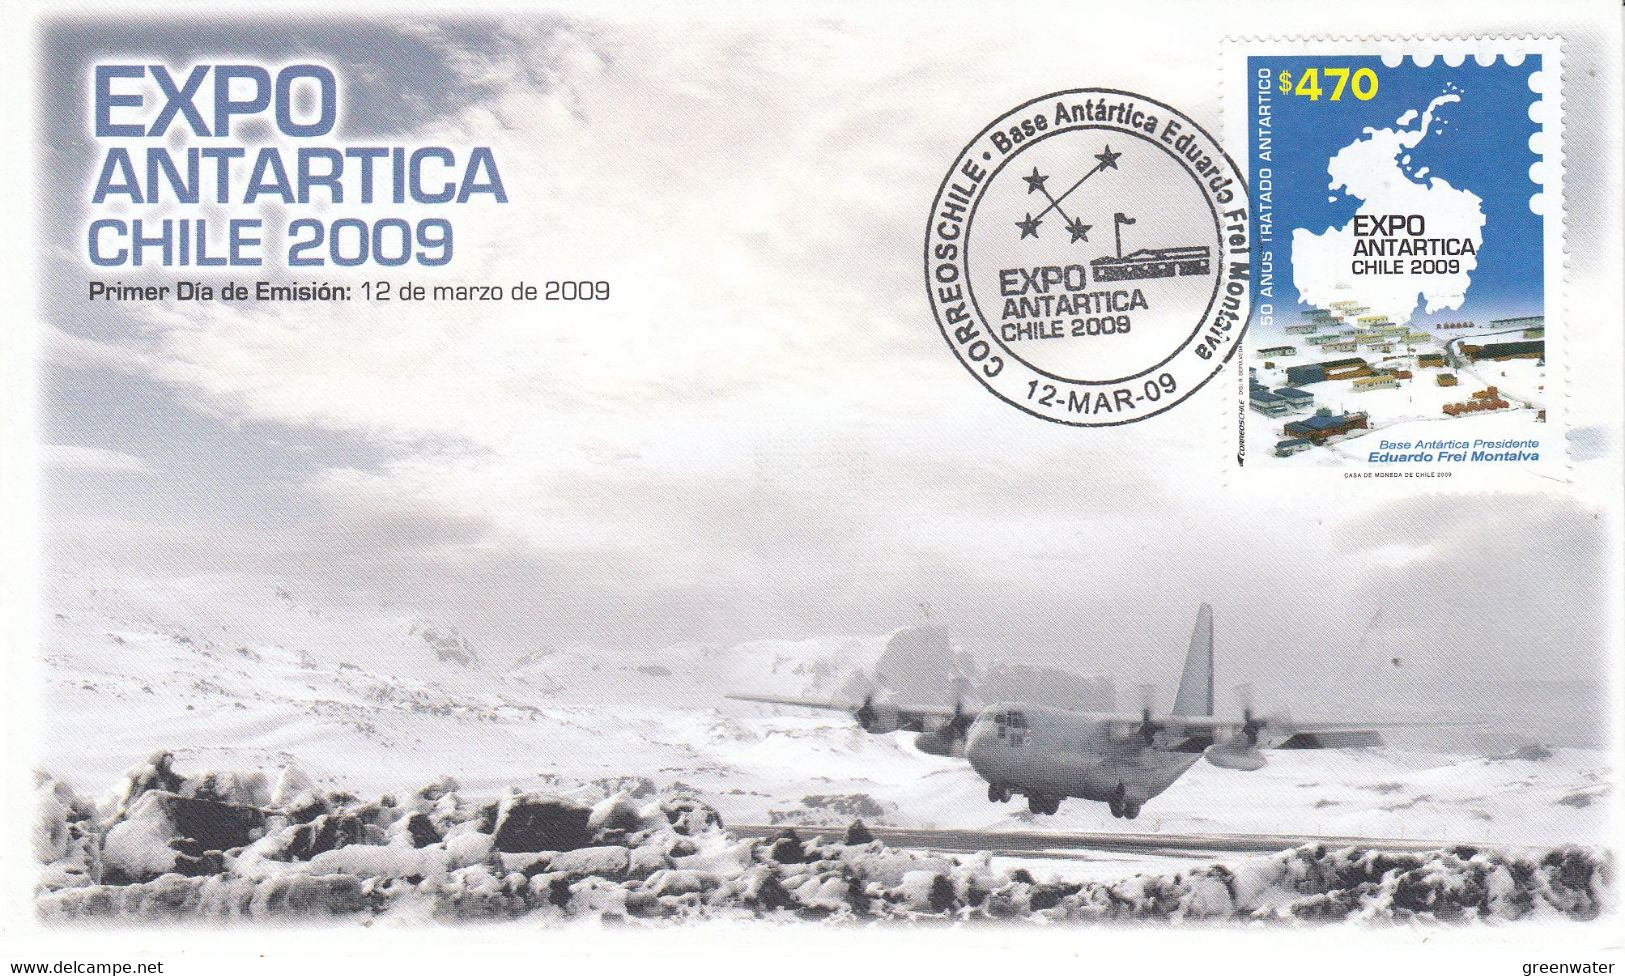 Chile 2009 Expo Antarctica 1v  FDC (AC169A) - Année Polaire Internationale